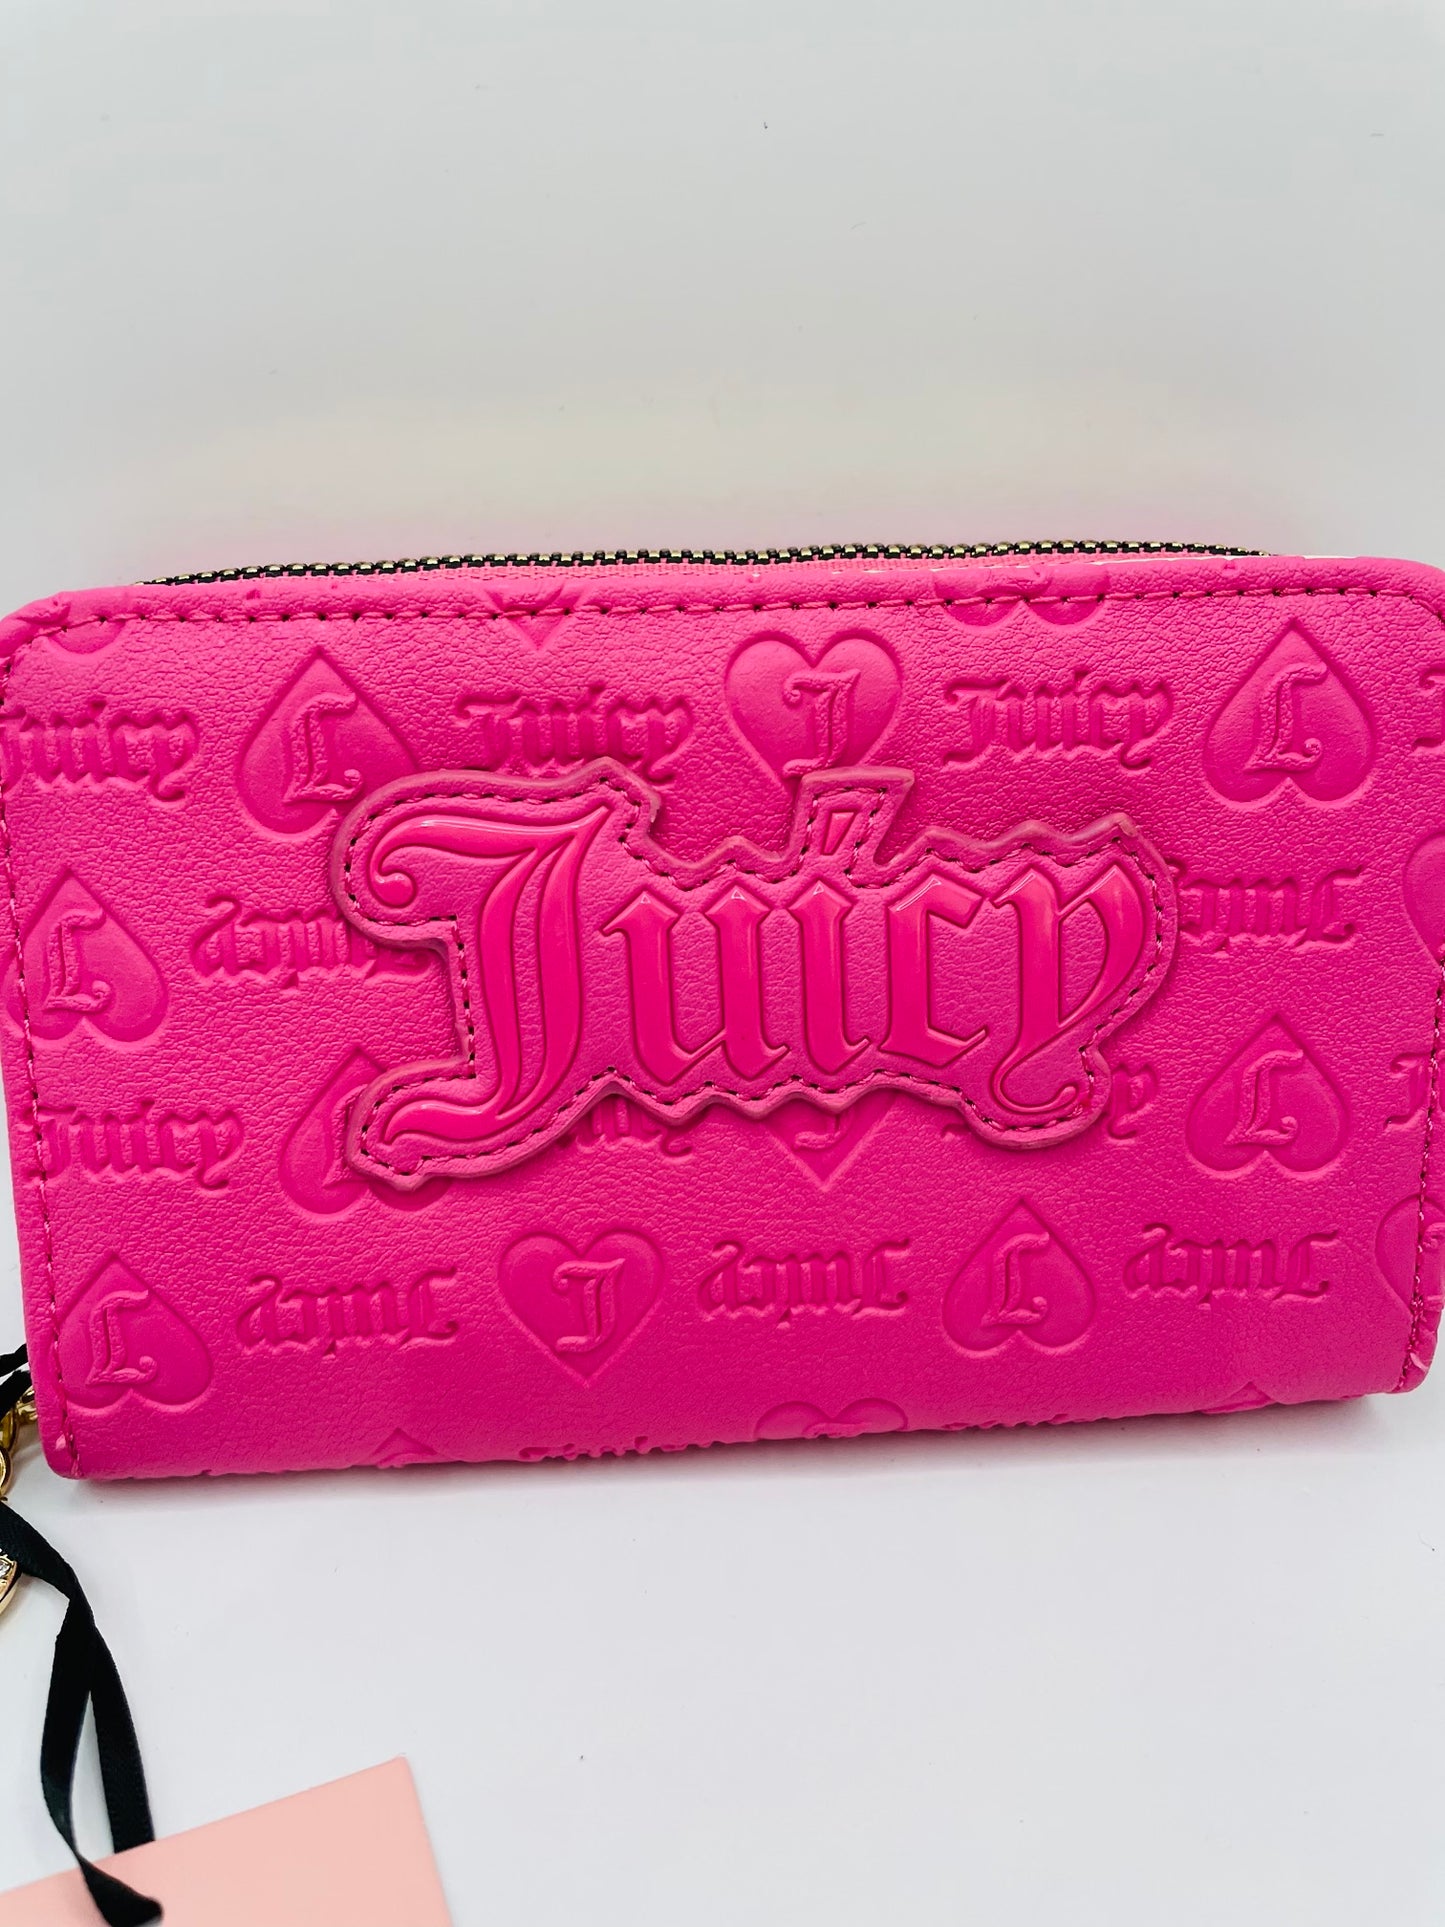 Juicy couture wallet